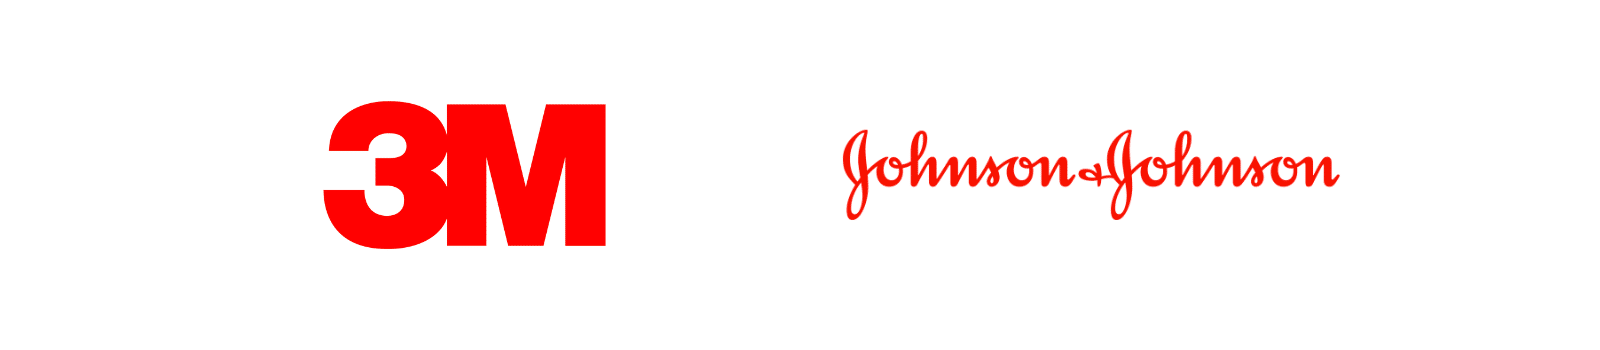 3M and Johnson and Johnson logos